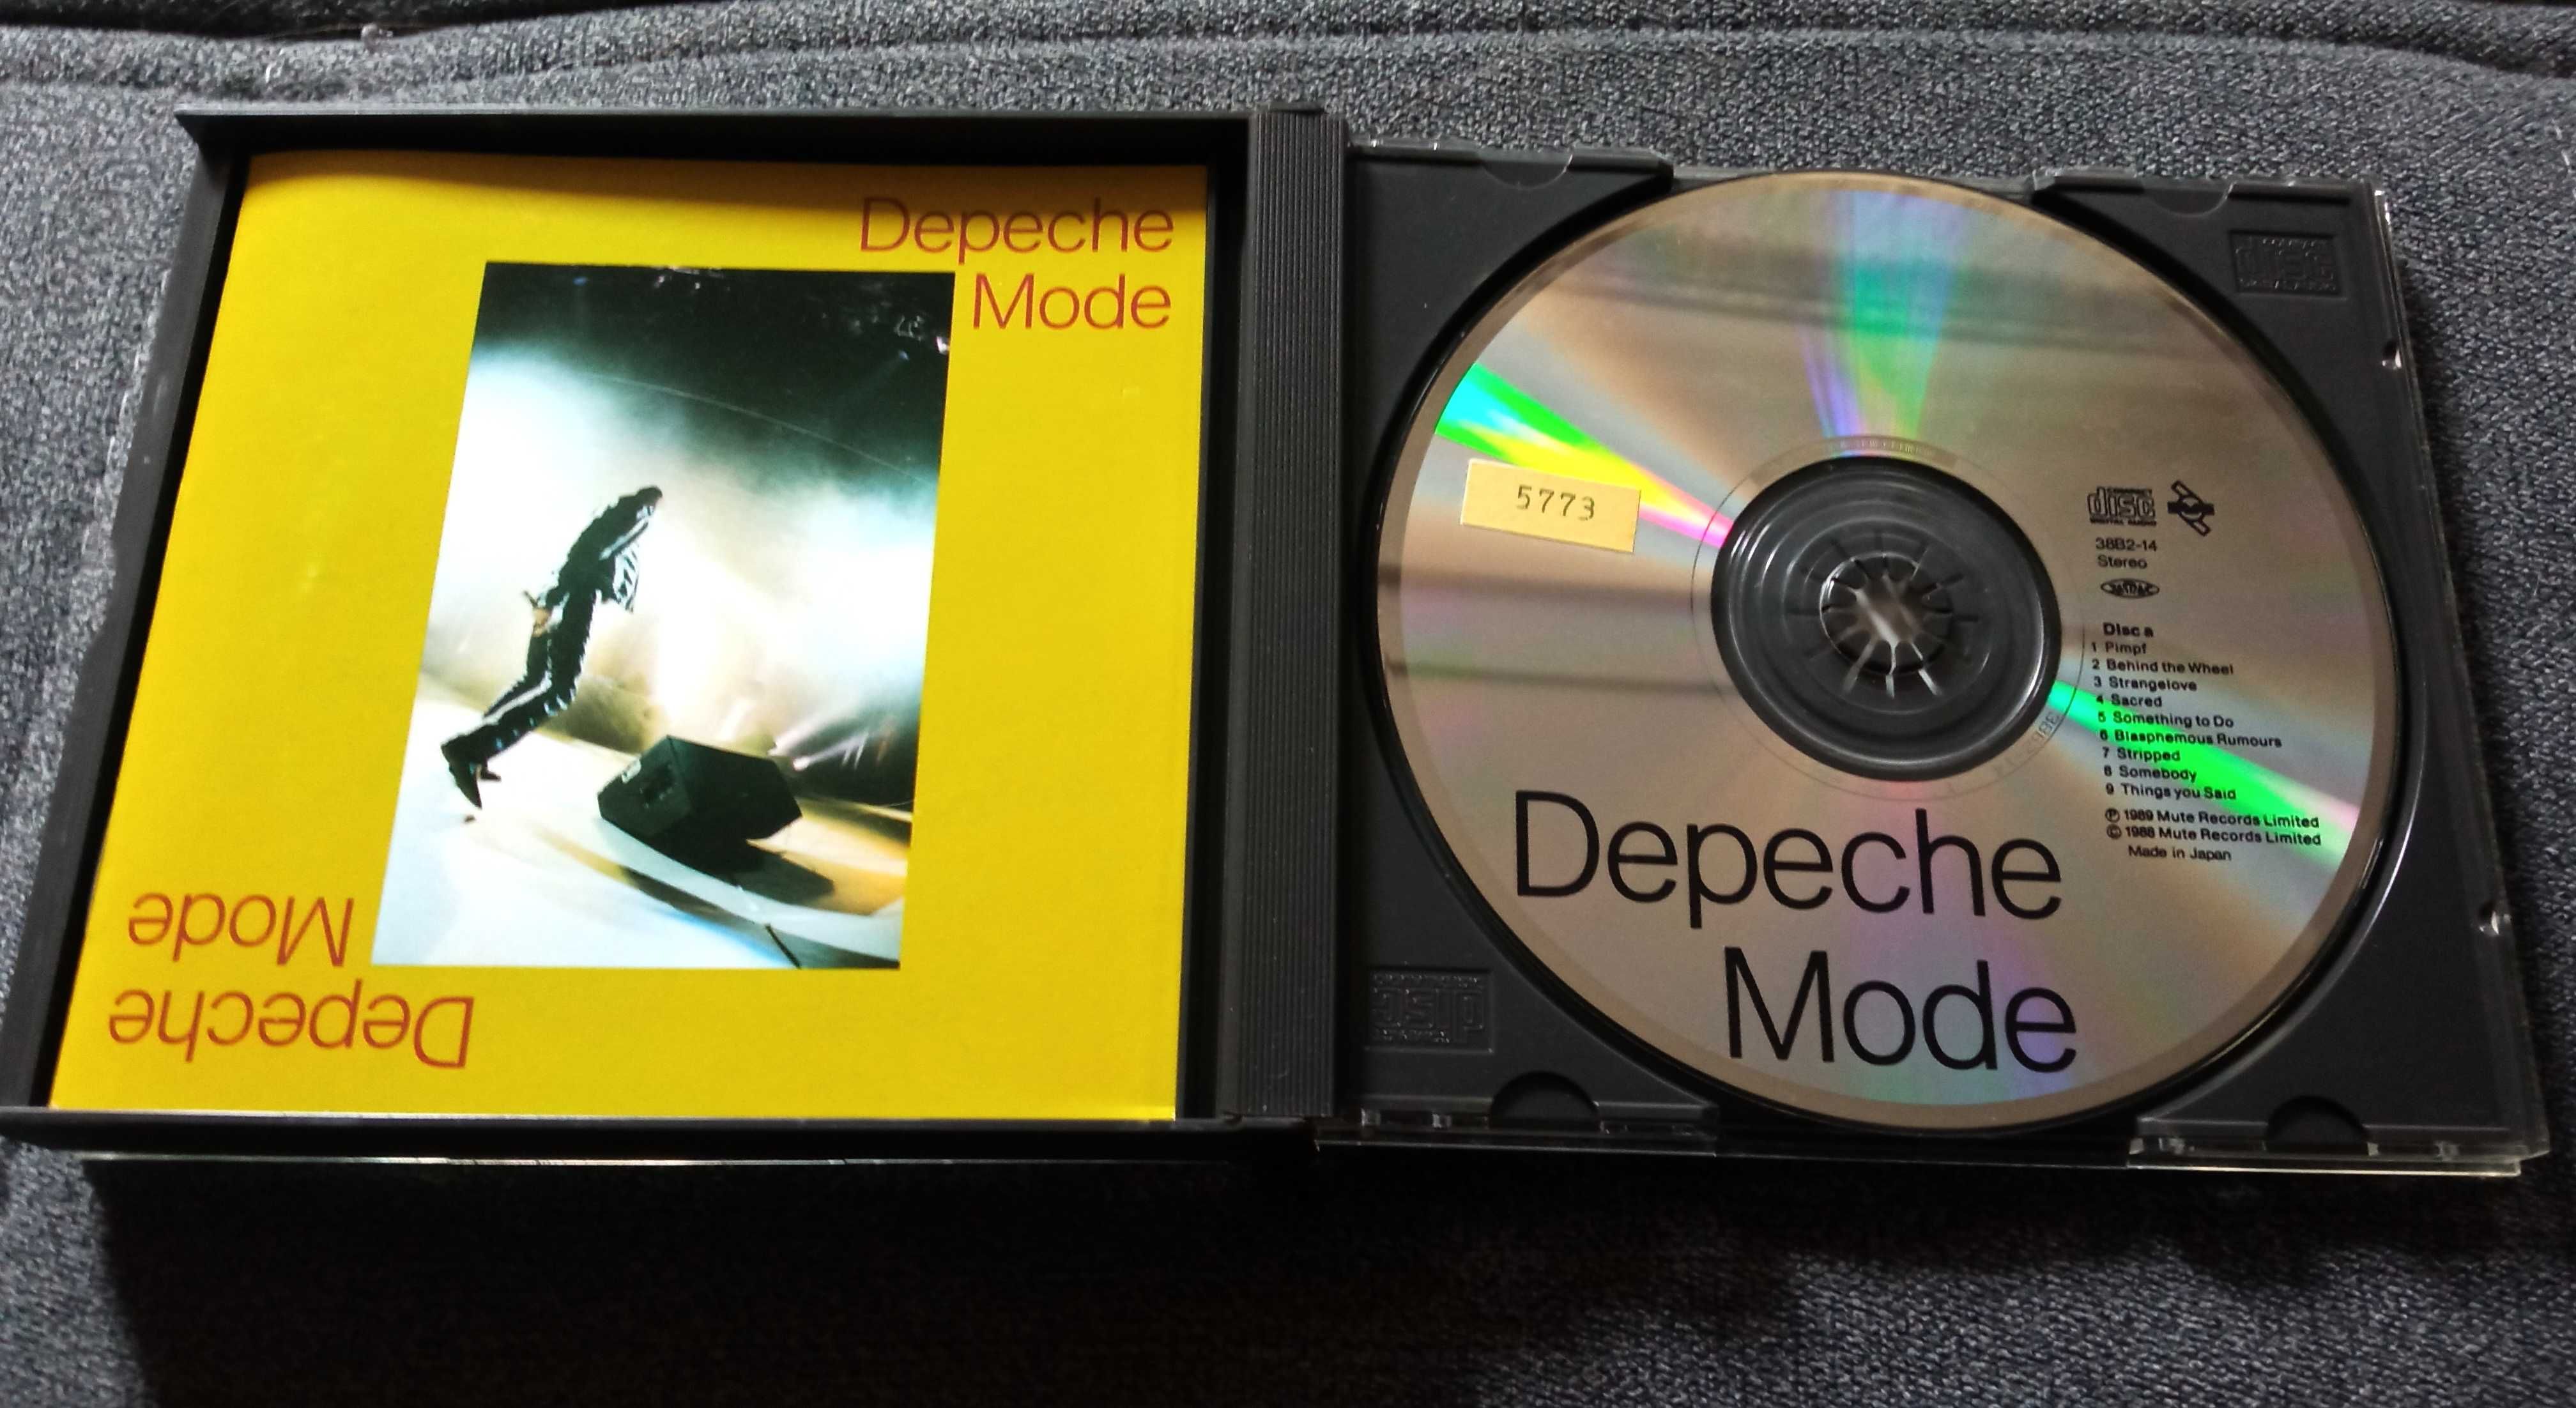 Depeche Mode 101 1press 1989 2CD Japan